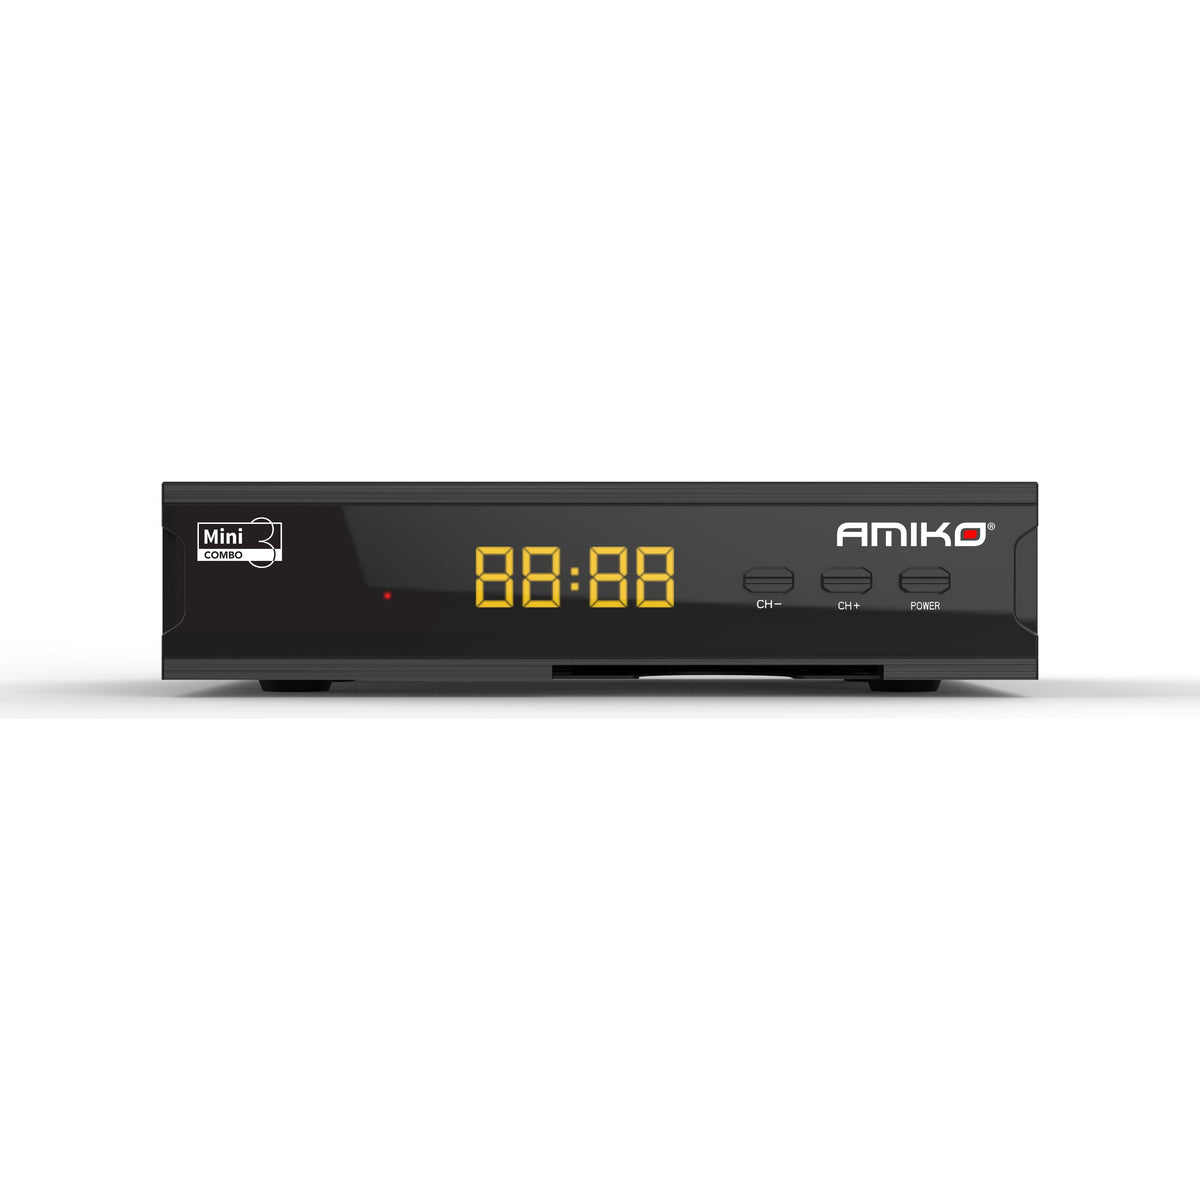 Amiko Mini Combo 3 TV Receiver - Black | AMIKOMC3 from Amiko - DID Electrical